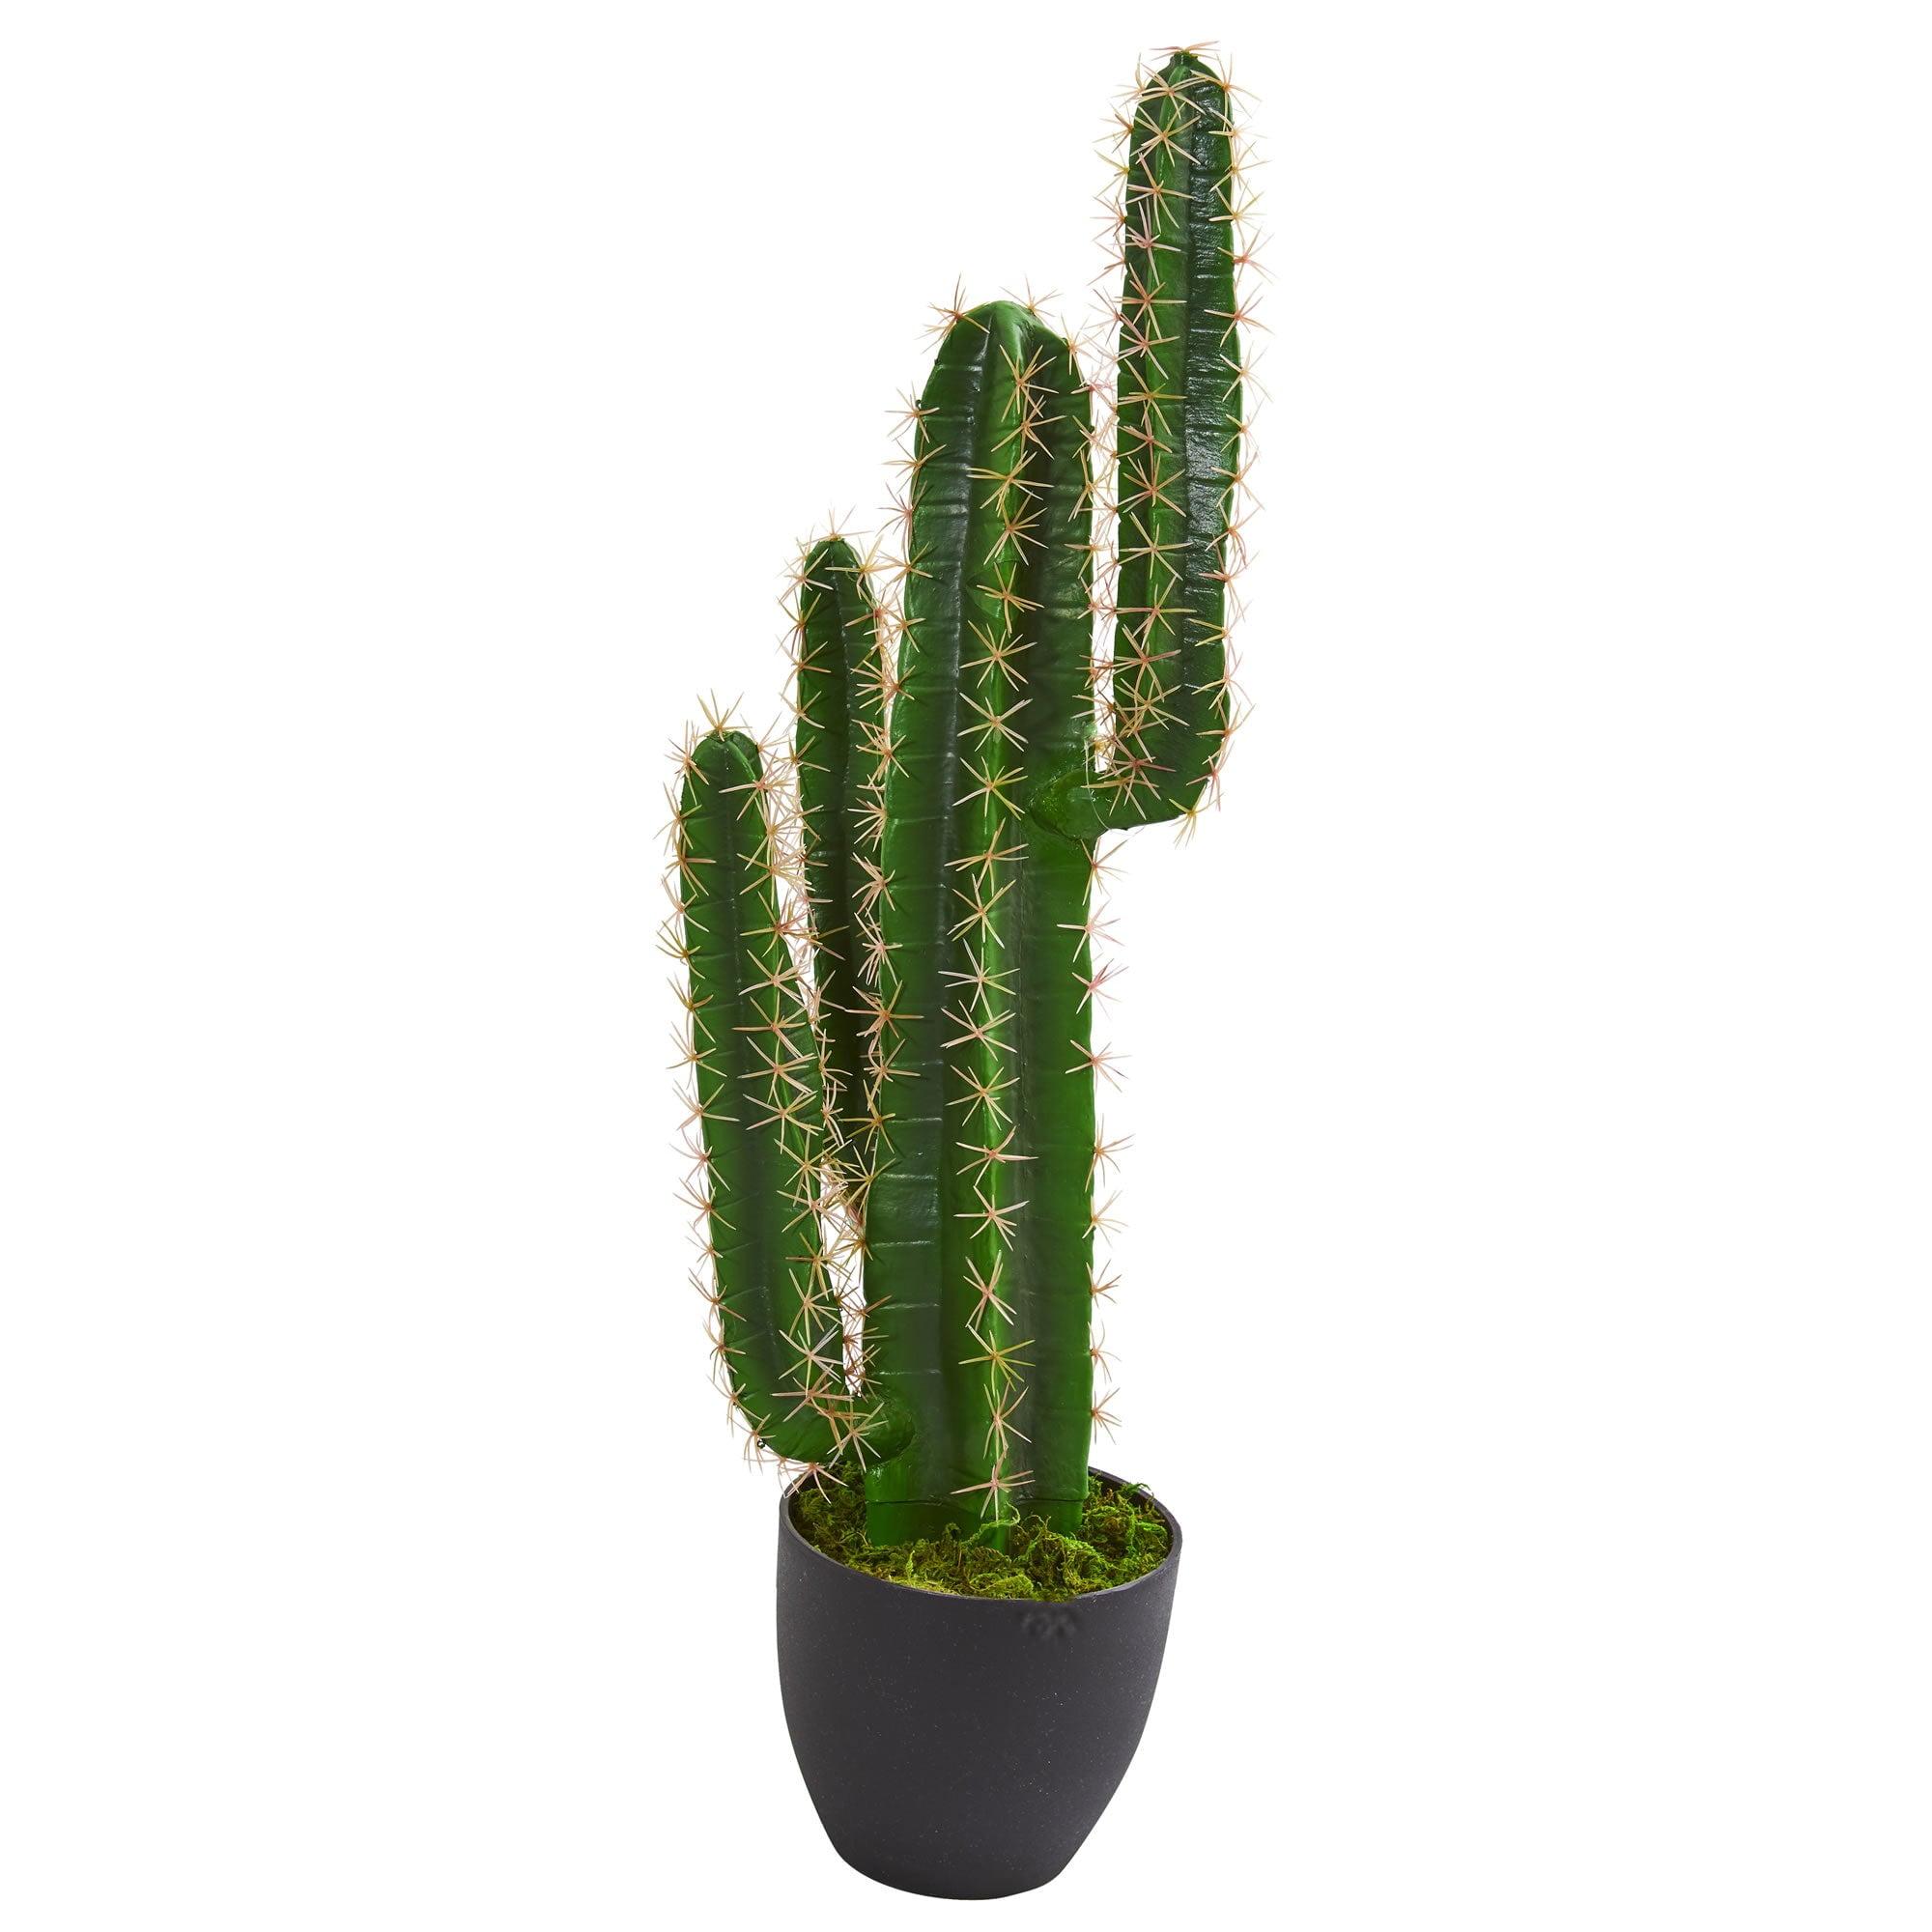 Desert Oasis Lifelike Cactus Arrangement in Black Planter, 38"